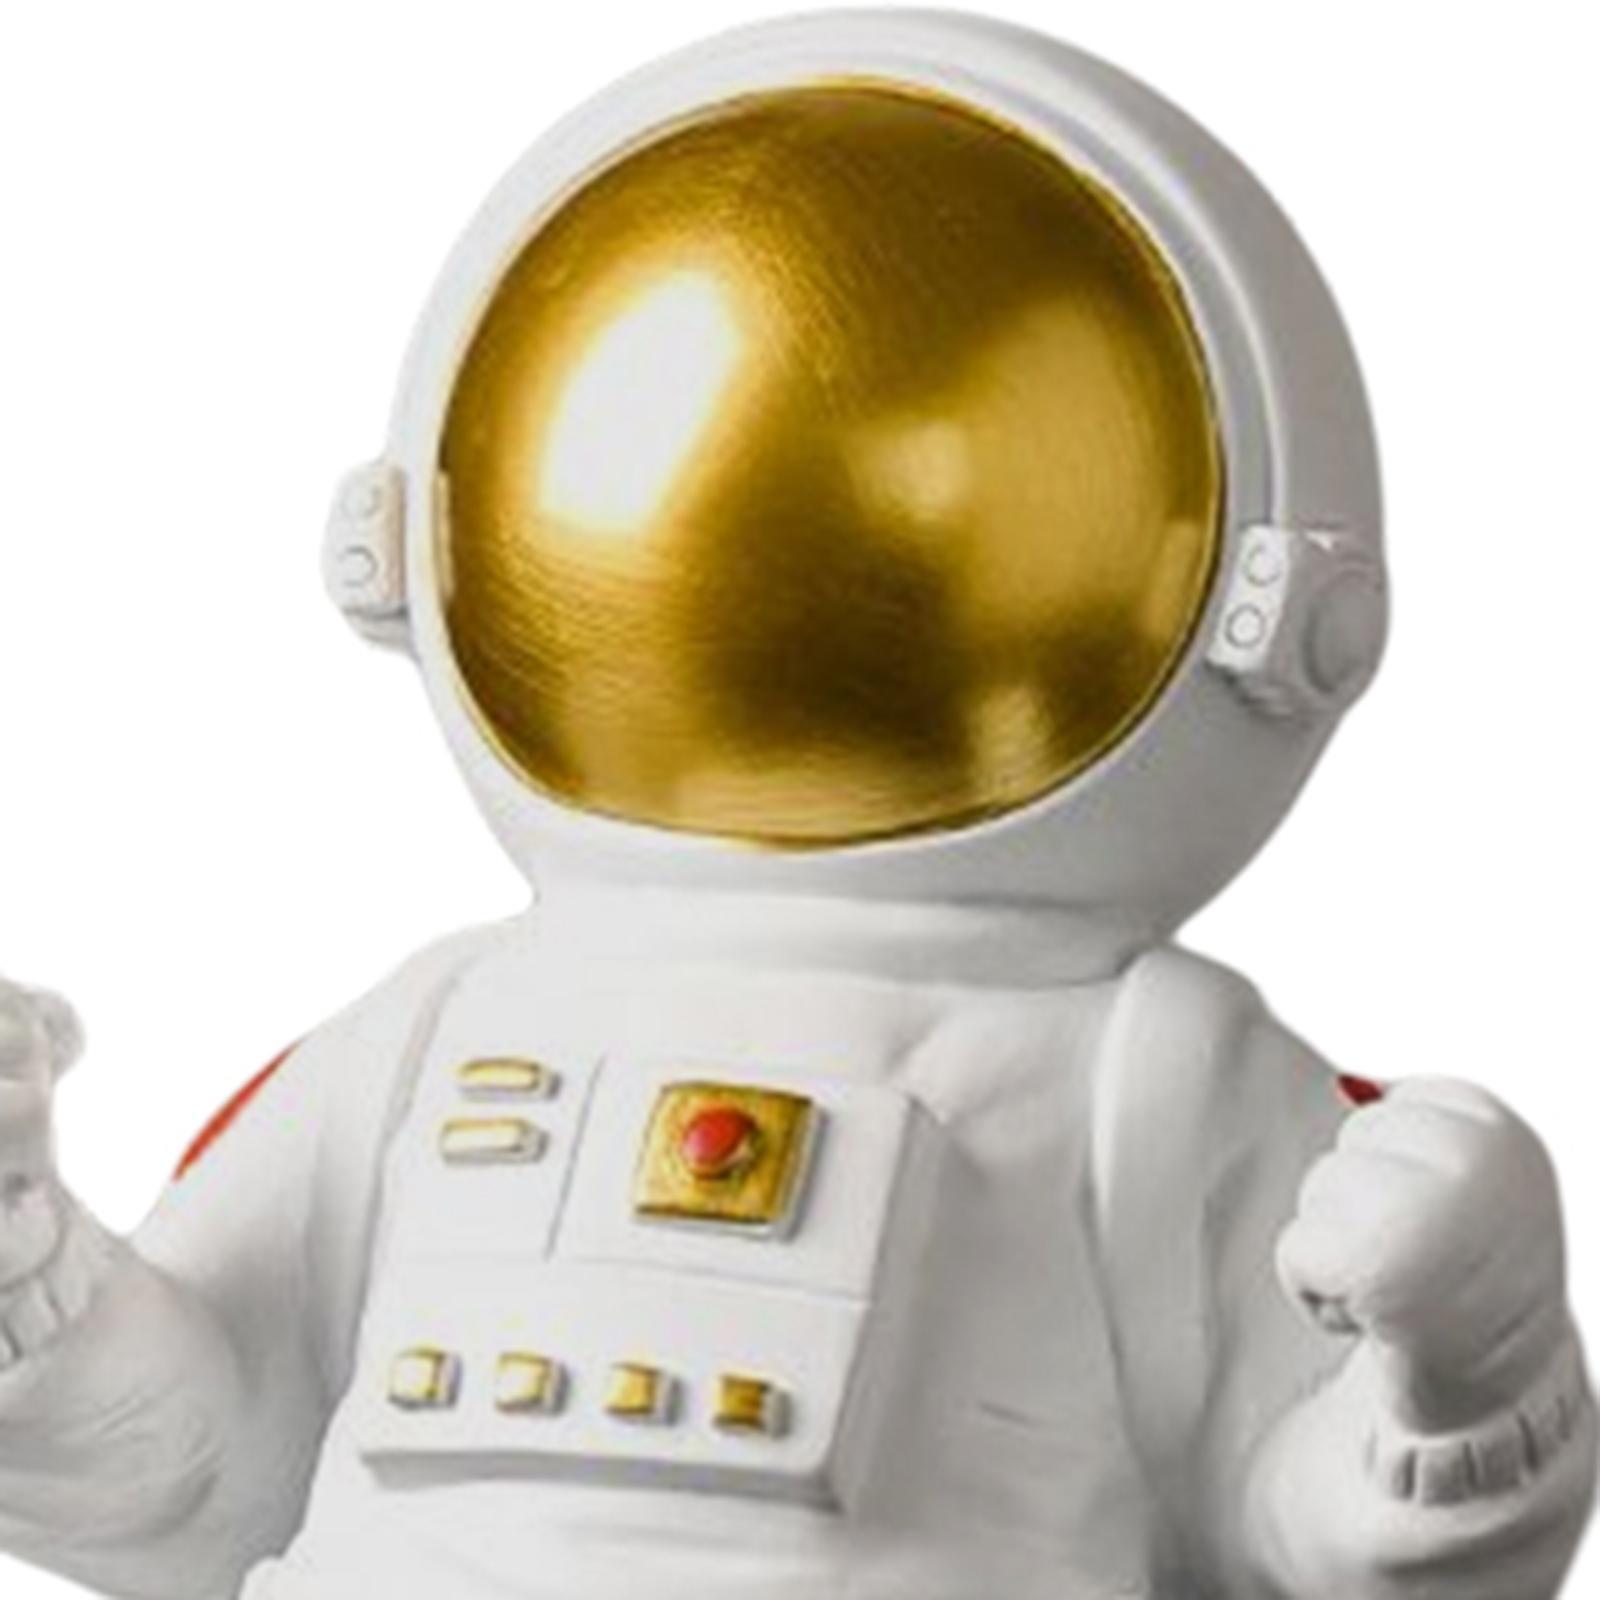 2 Pieces Astronaut Statue Crafts, Sculpture Ornament Resin Gift Desktop